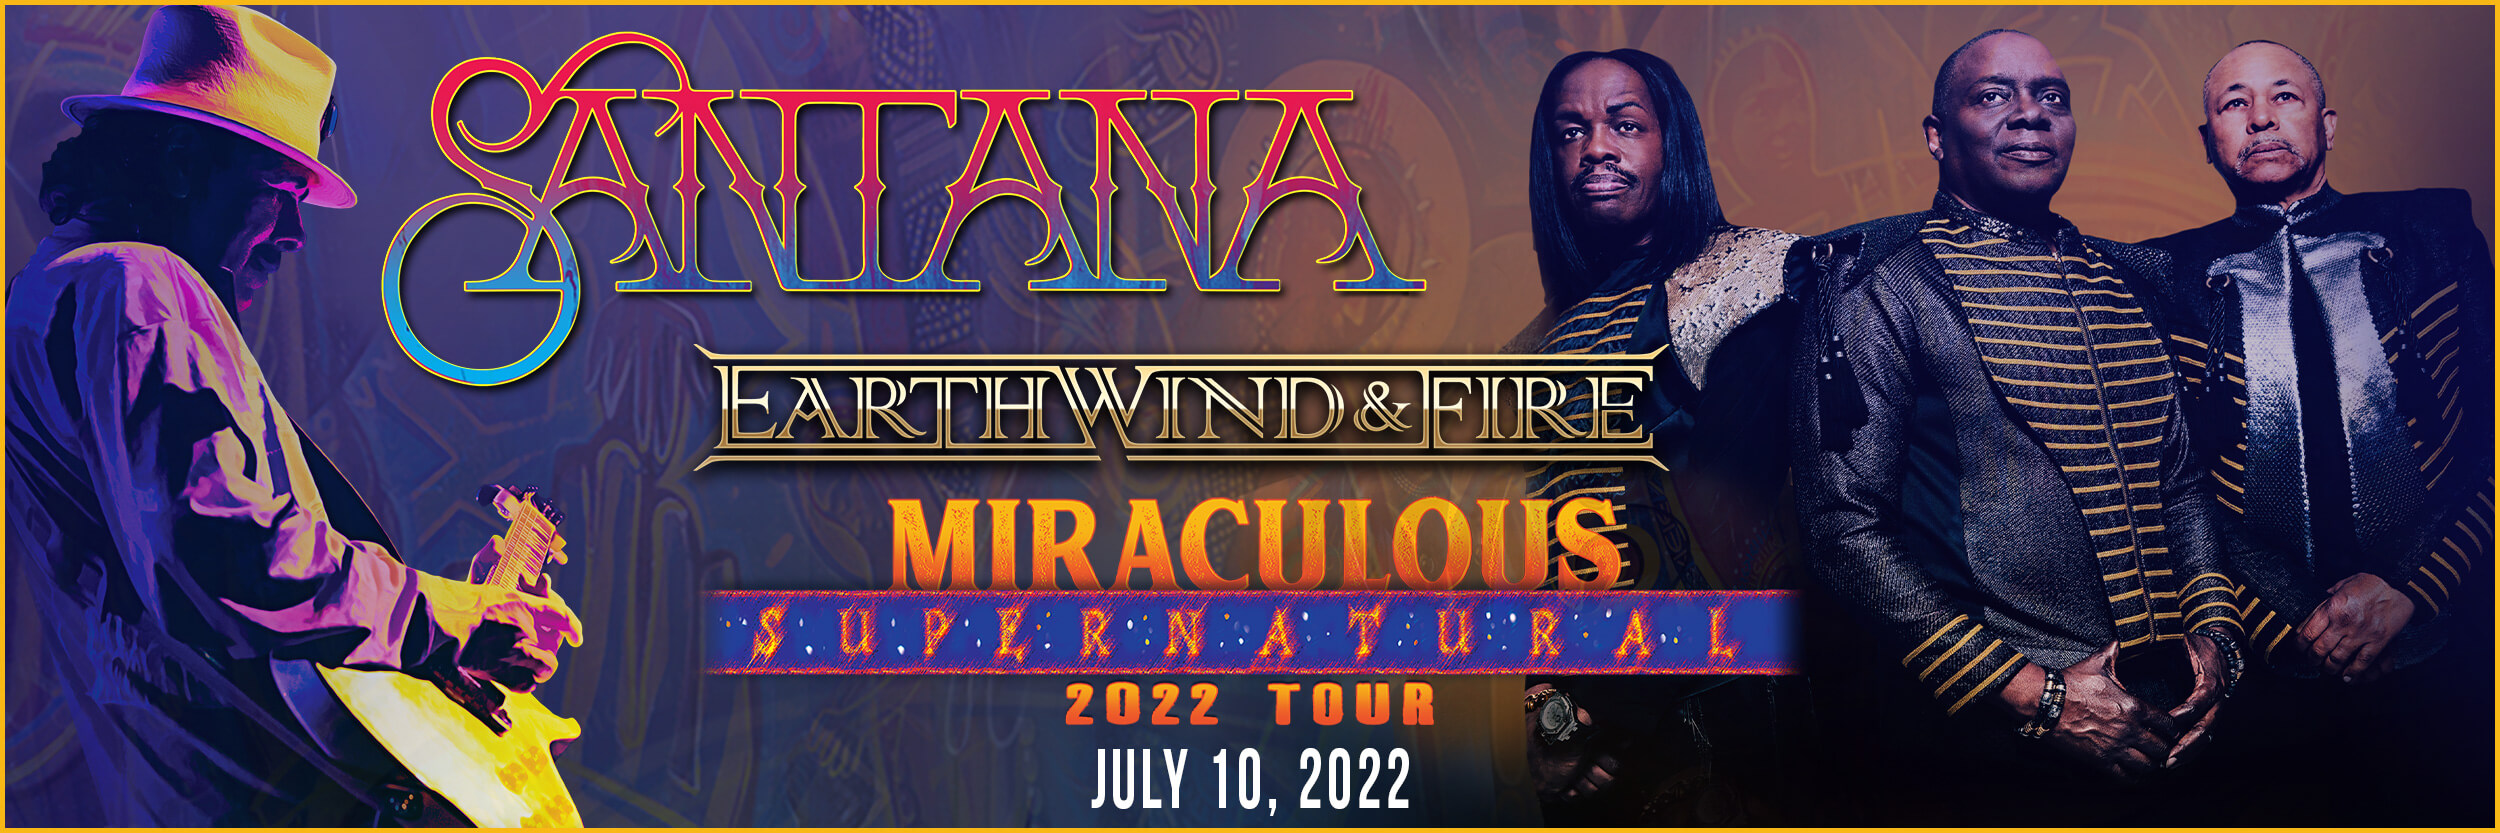 Santana with Earth Wind and Fire July 10, 2022